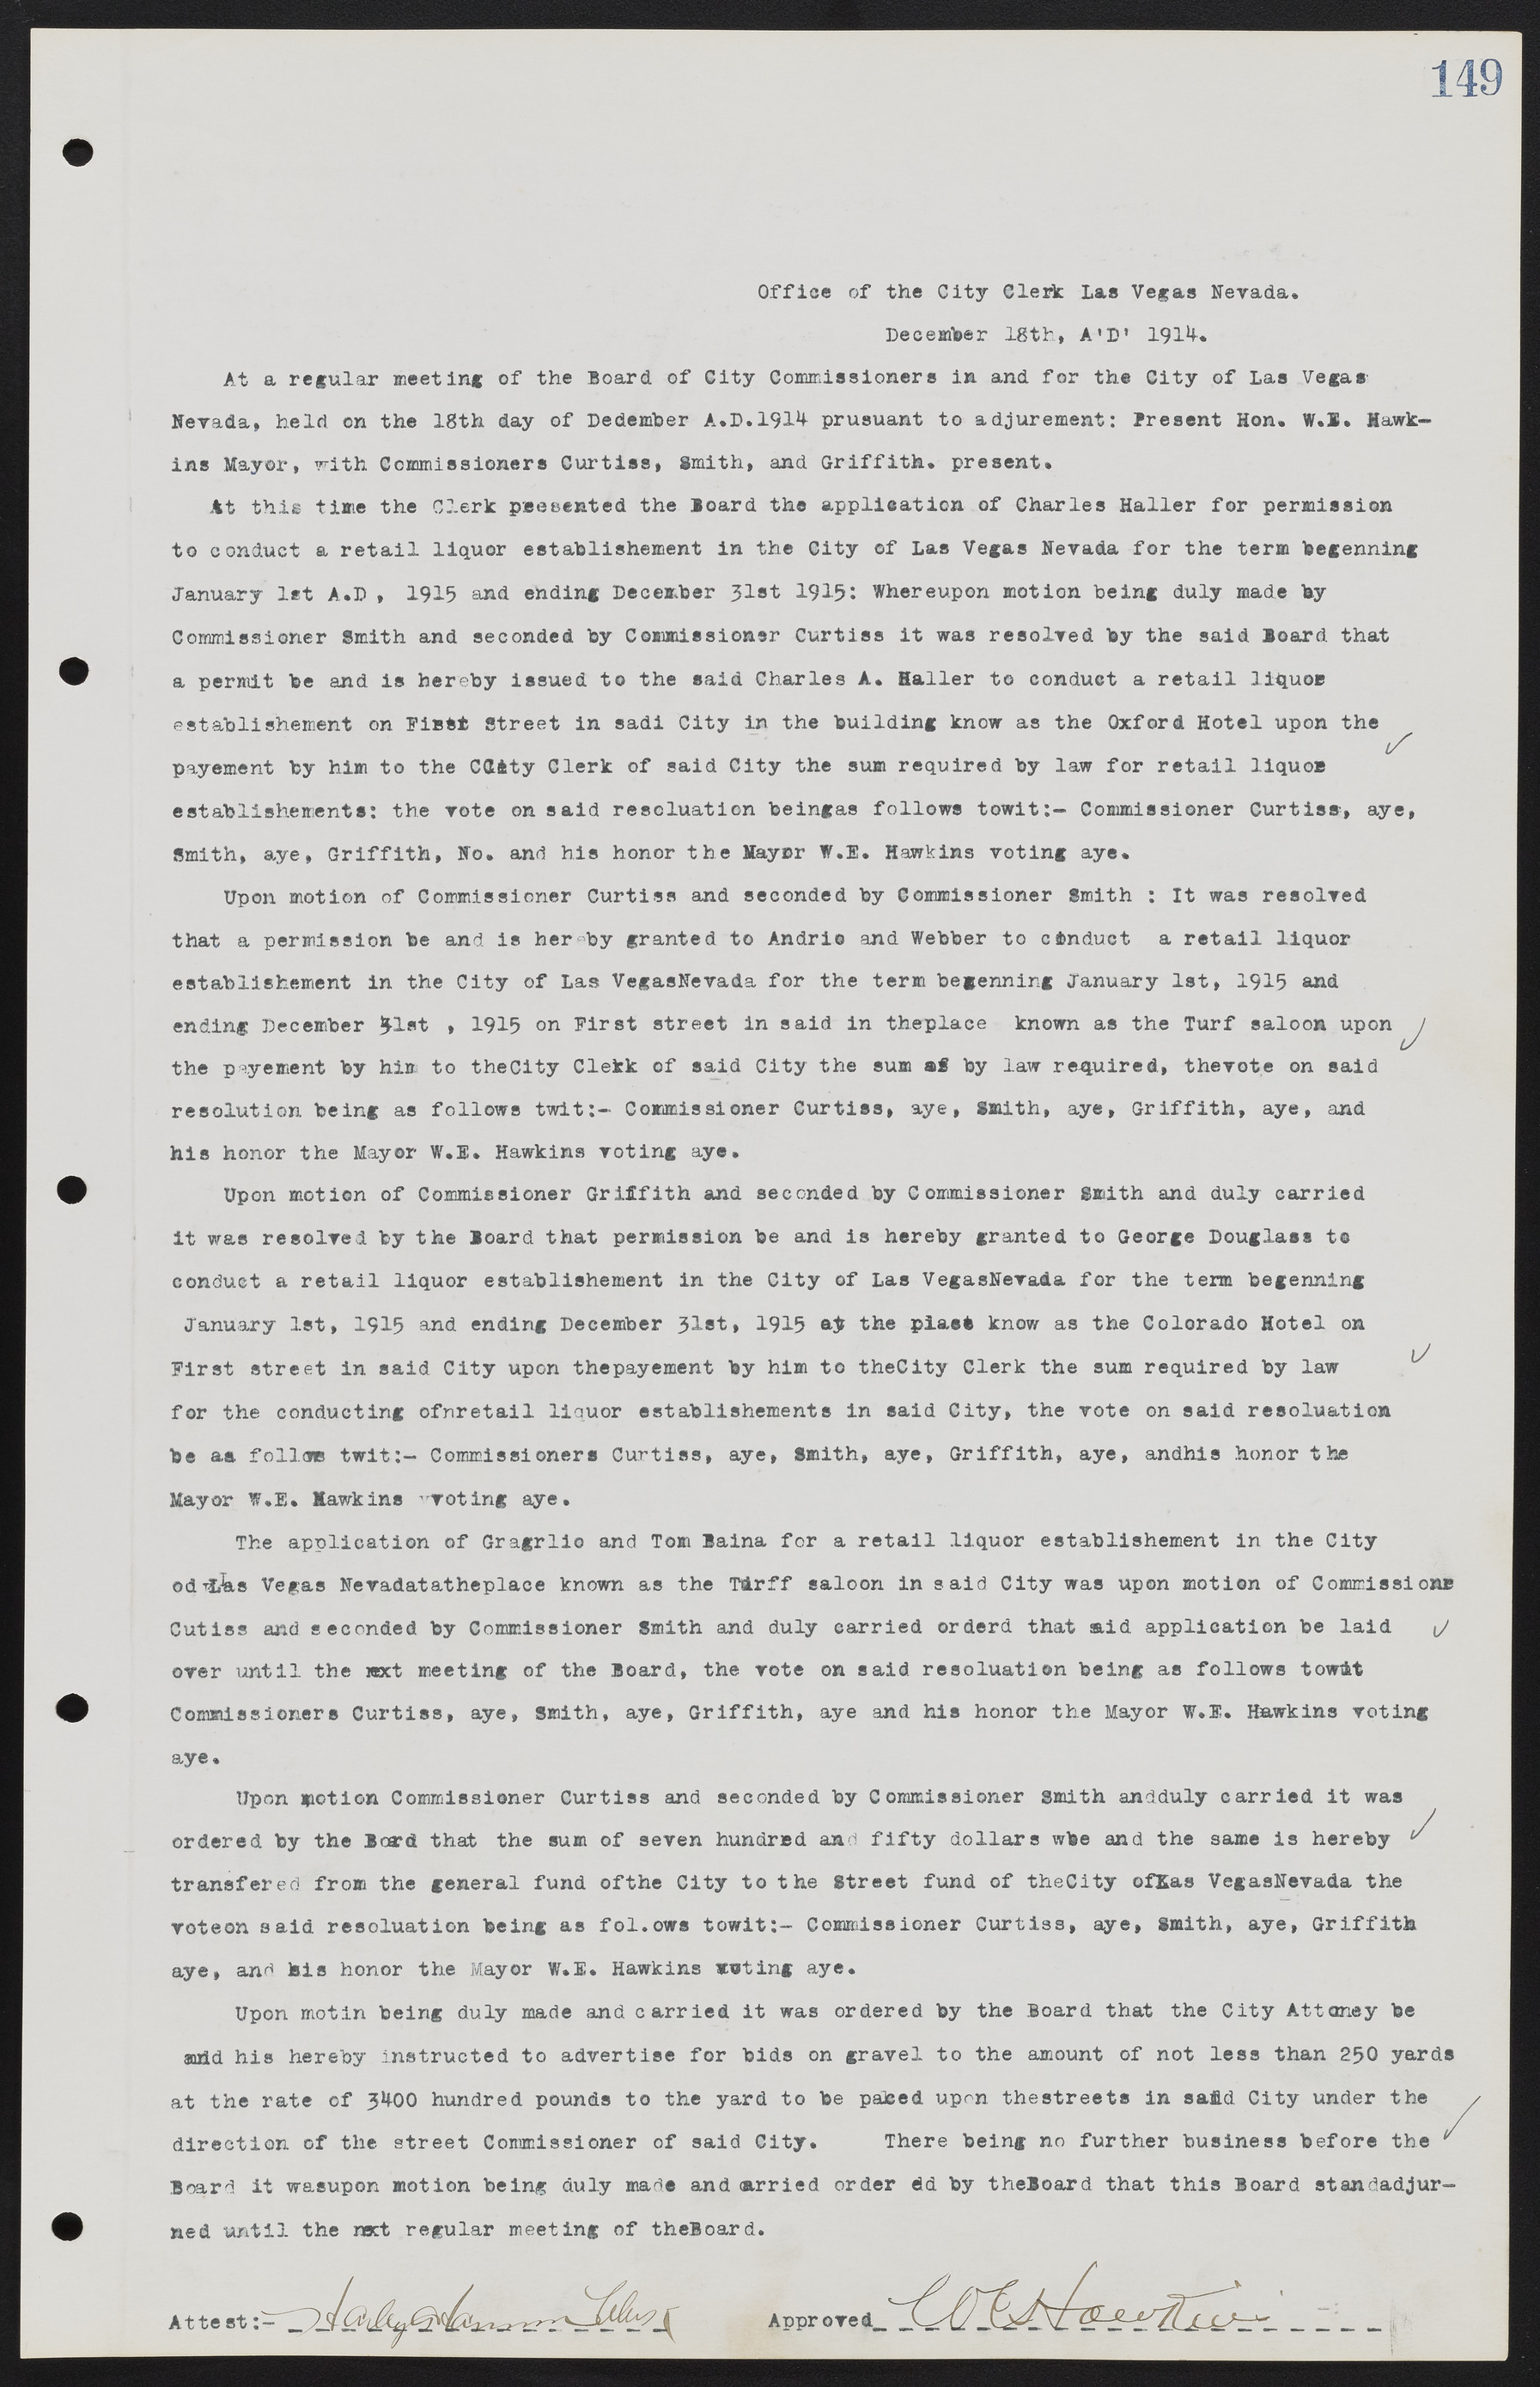 Las Vegas City Commission Minutes, June 22, 1911 to February 7, 1922, lvc000001-165